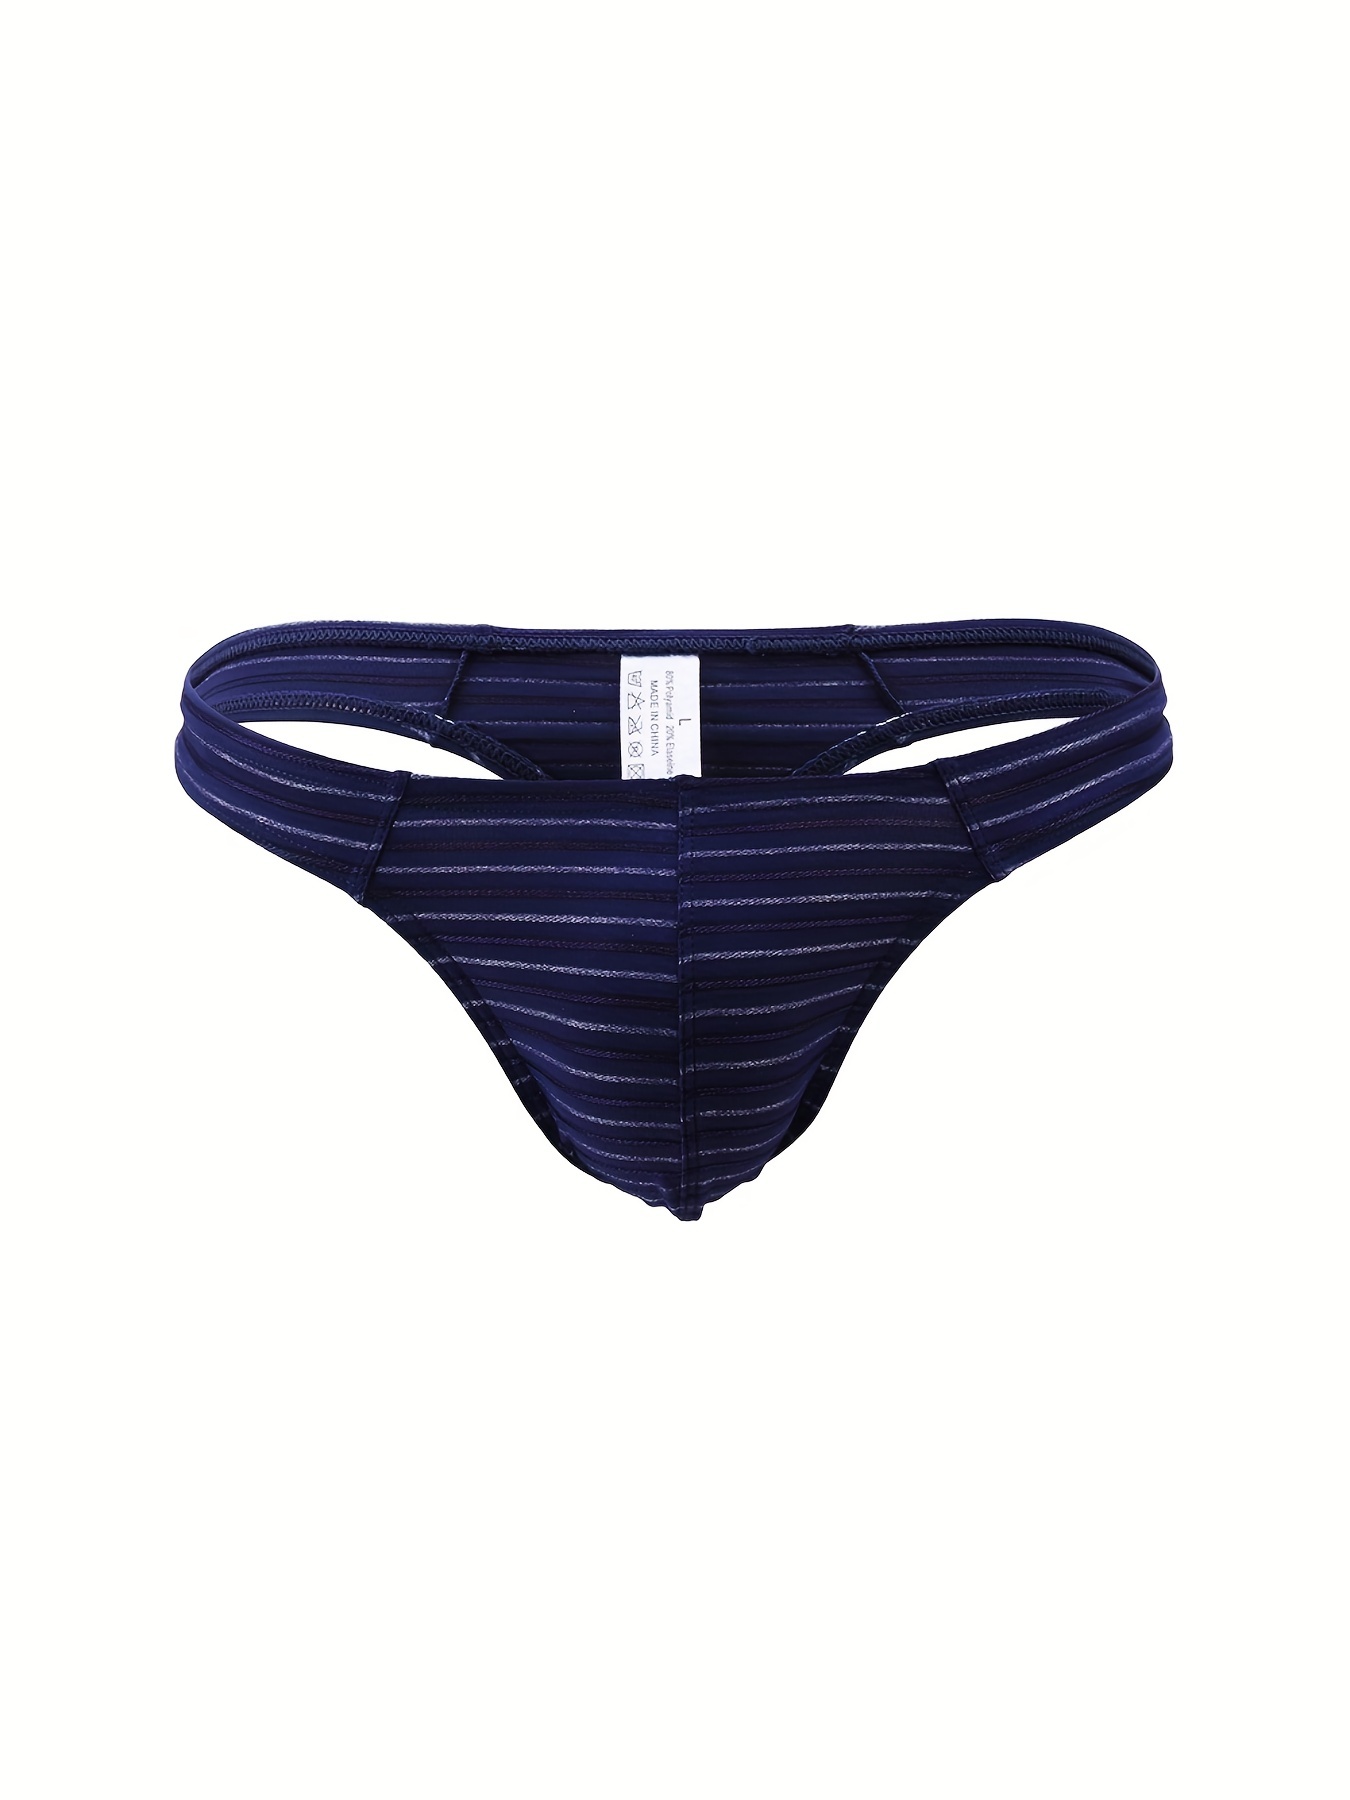 Men's High Quality Soft Panties Undies Underpants Low Waist G String Design